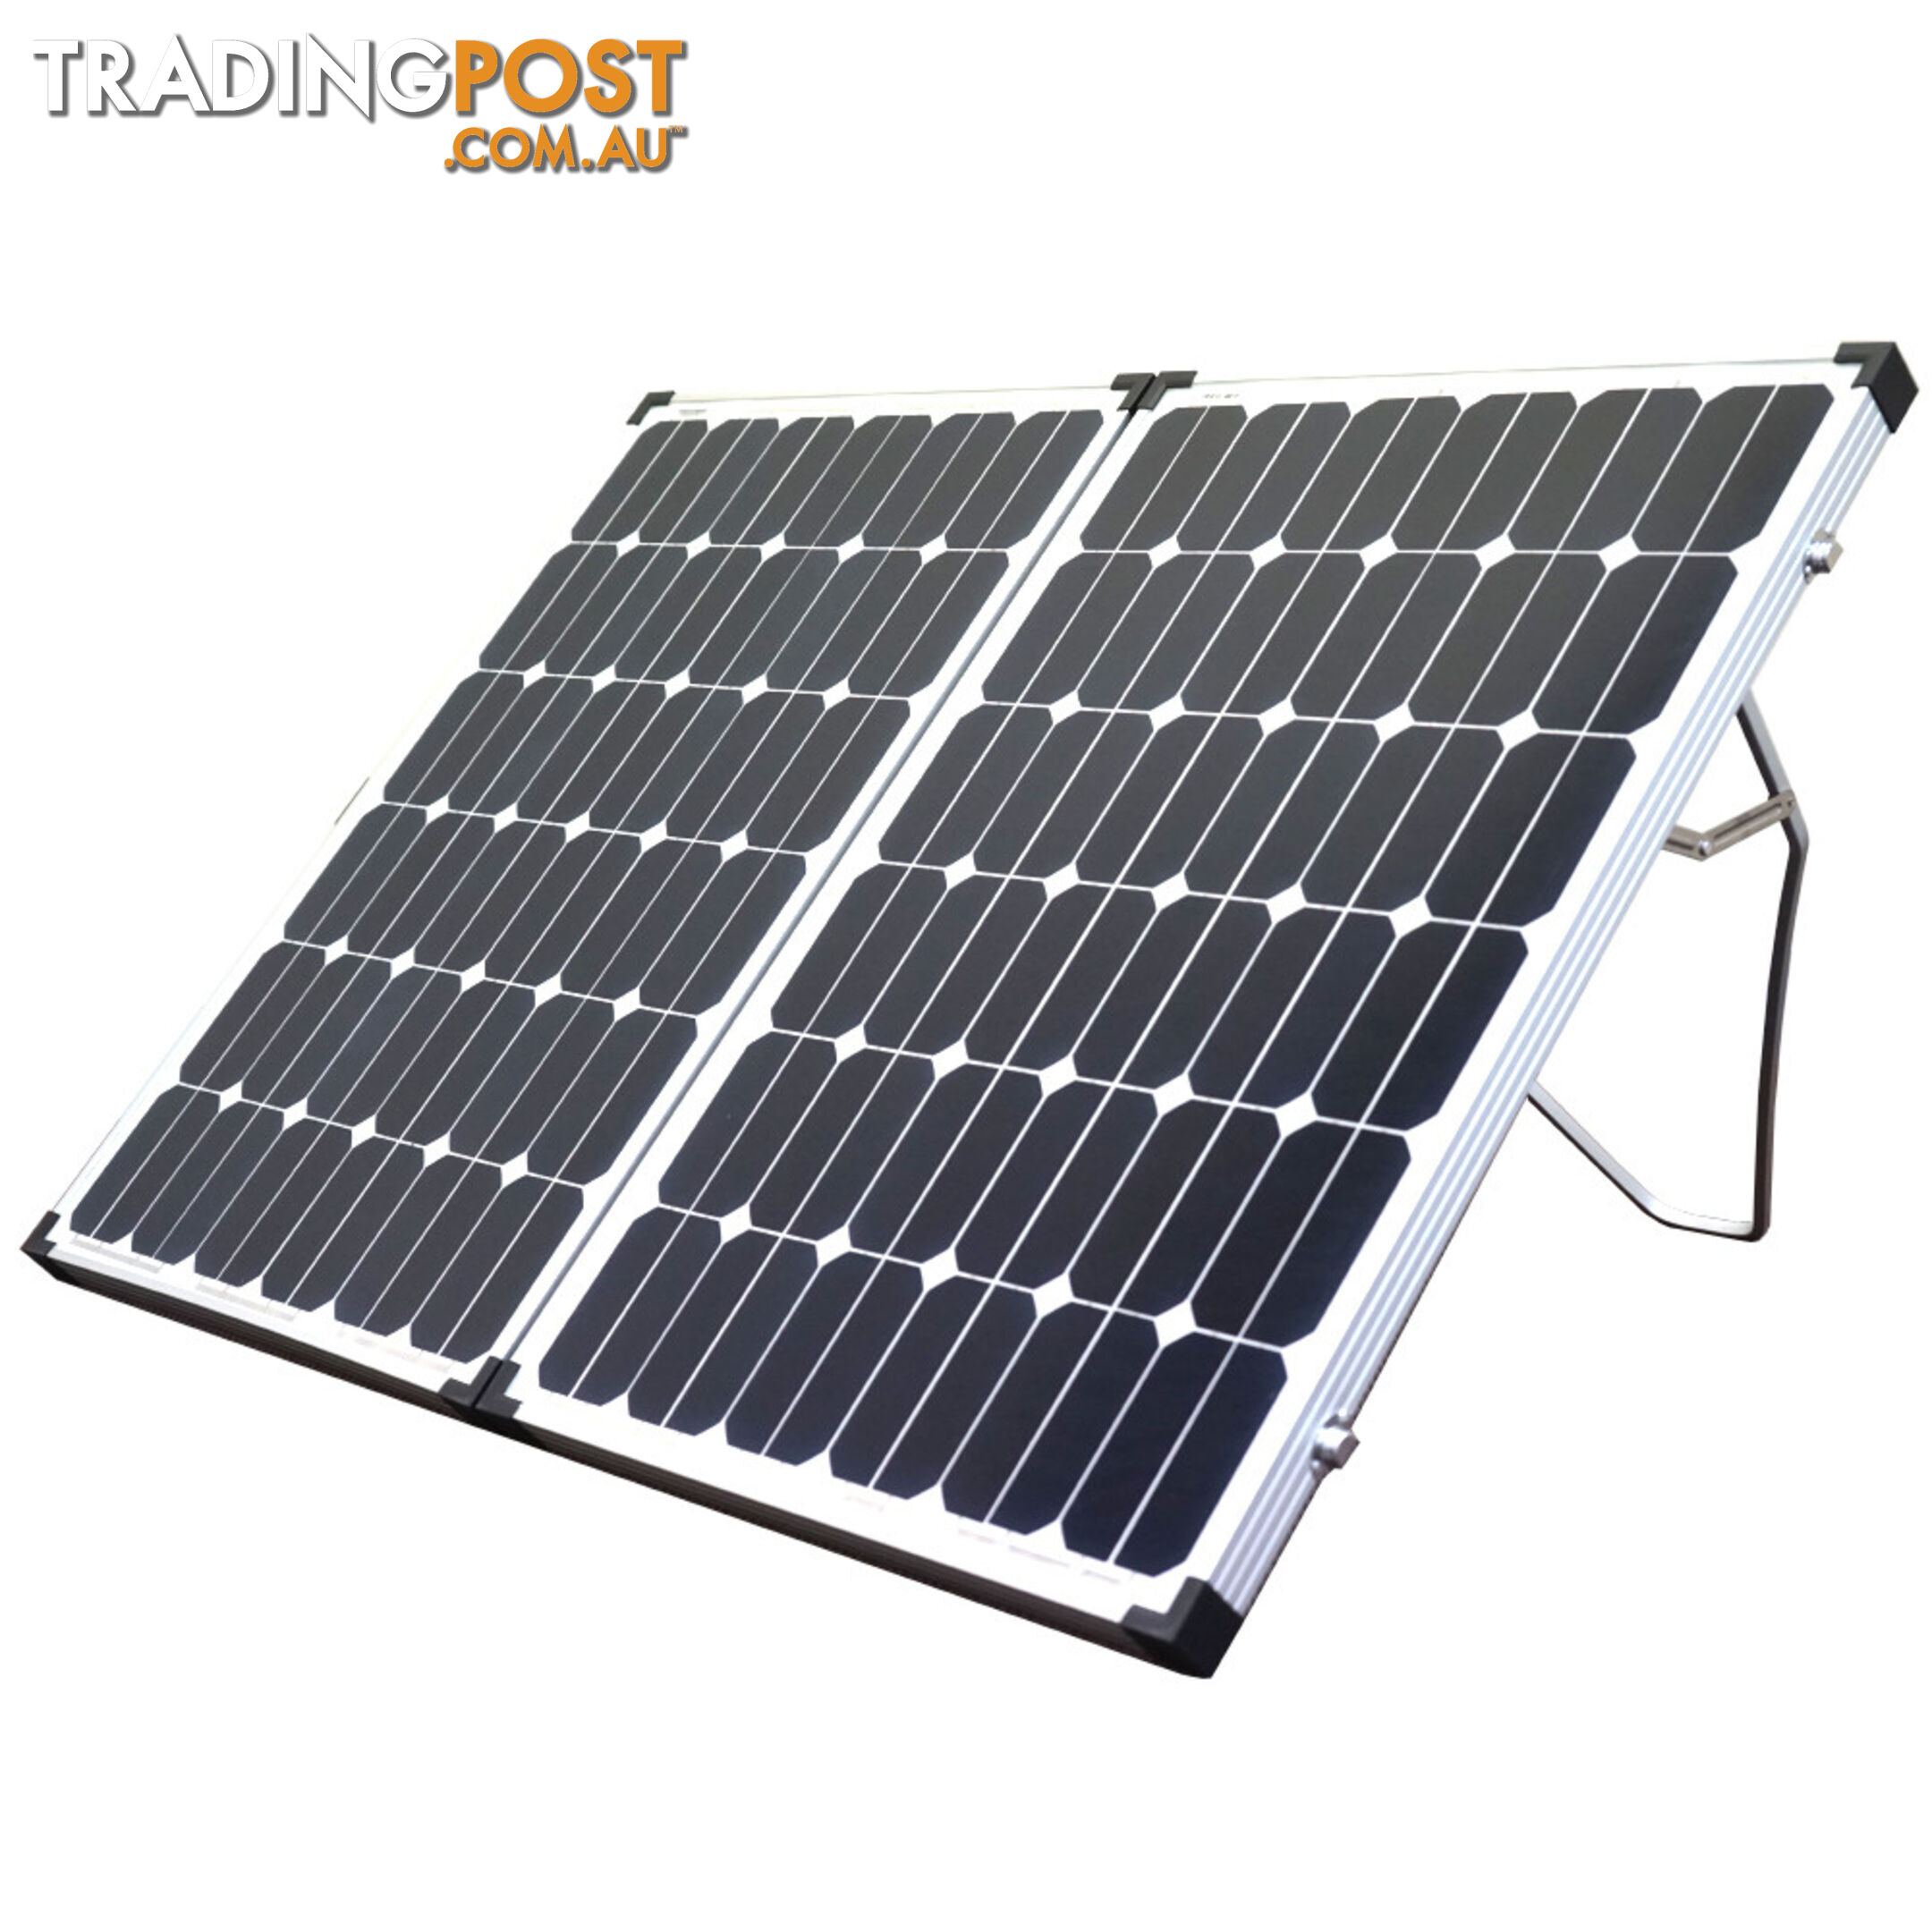 200W Folding Solar Panel Kit Caravan Camping Power 12V Mono Charging Battery